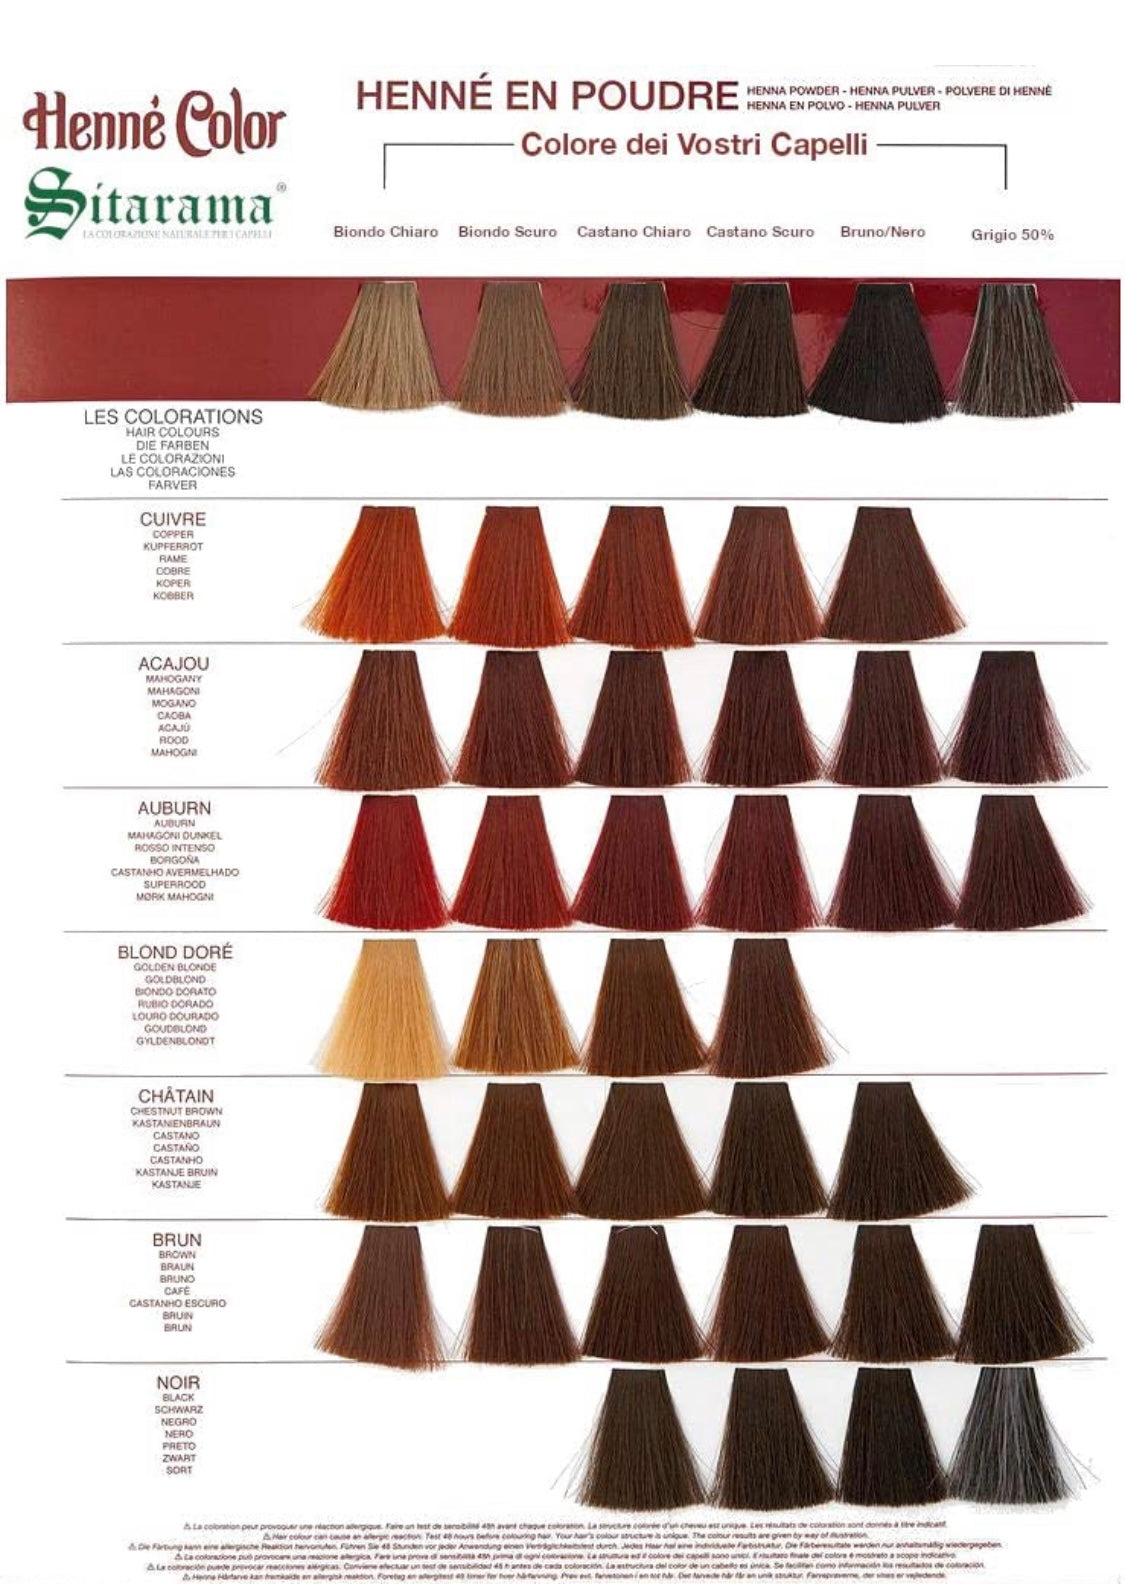 Sitarama Hennè Color tintura capelli in polvere - Rame Naturale 100g